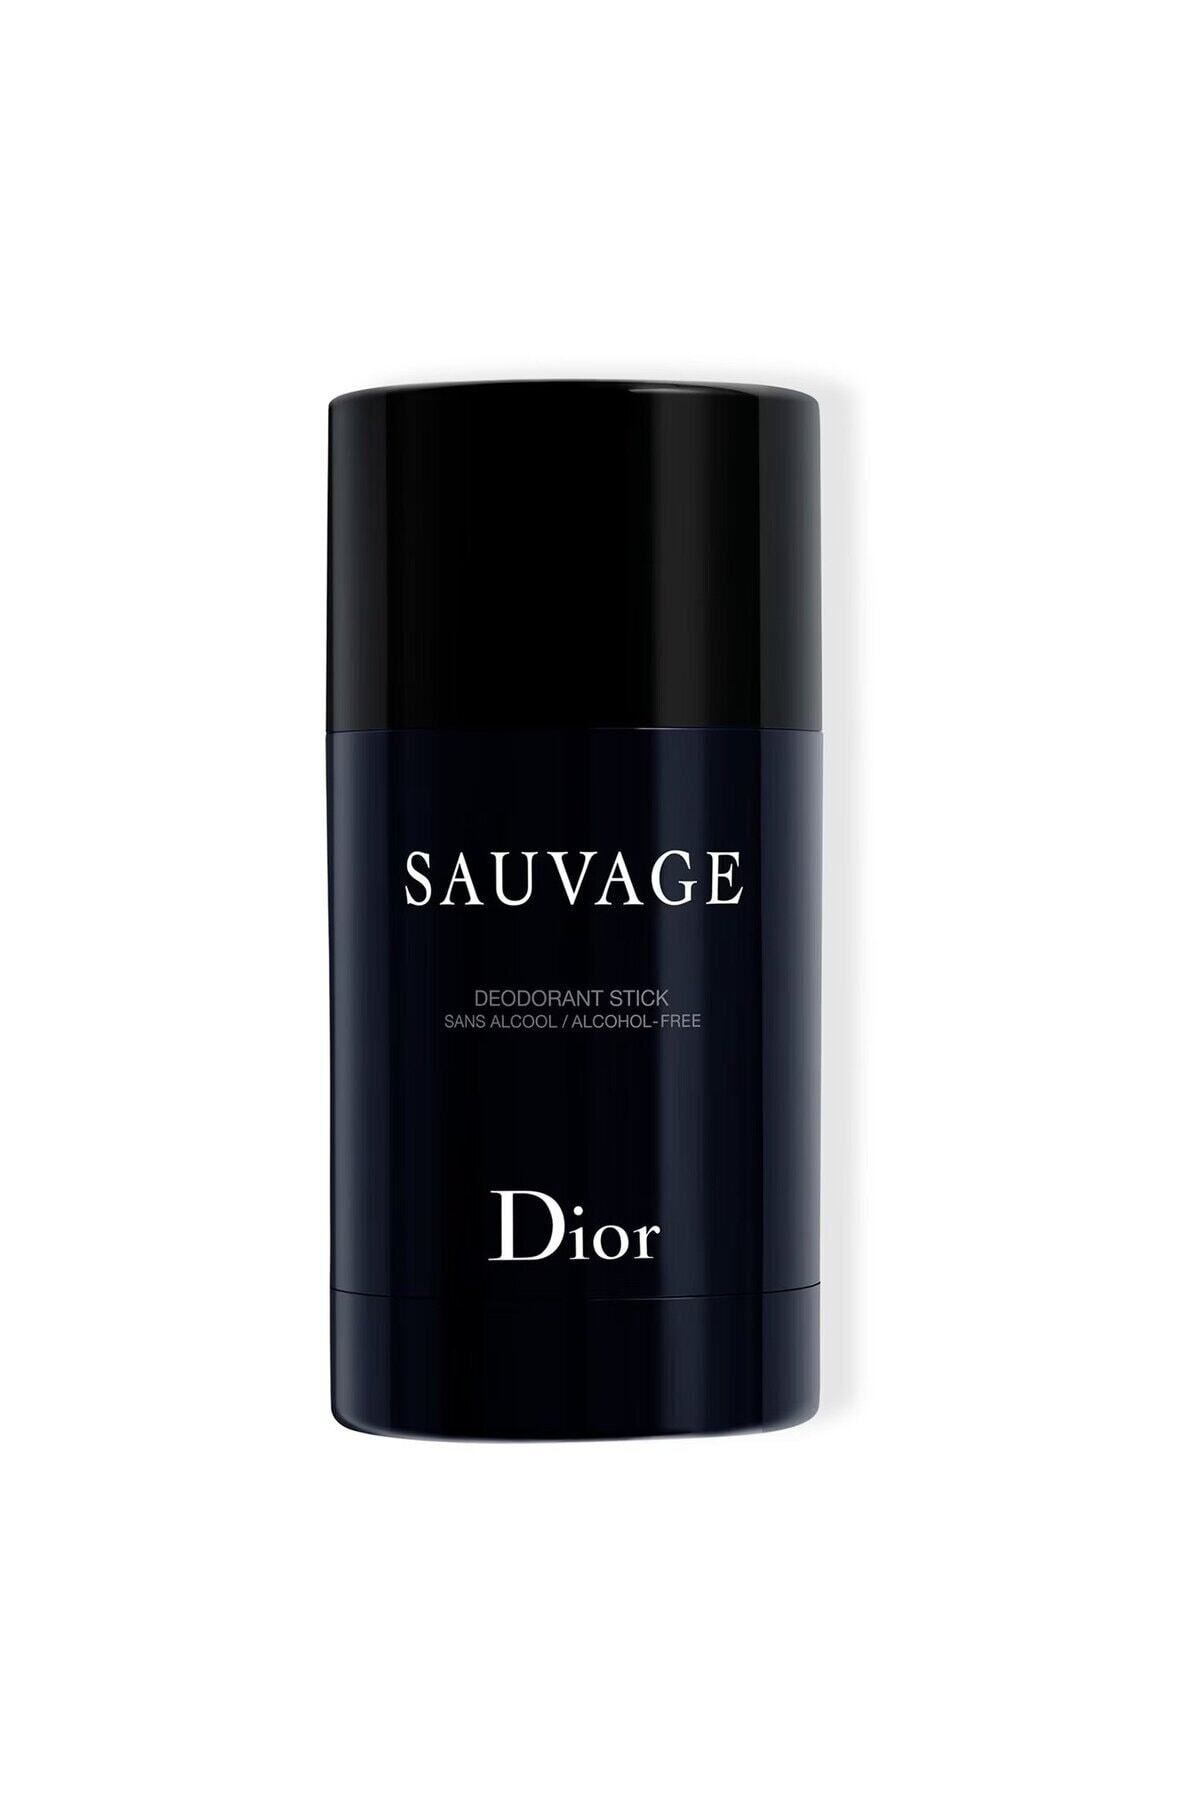 Dior Sauvage - Erkekler İçin Alkolsüz Deodorant Roll On-Stick 75 gr